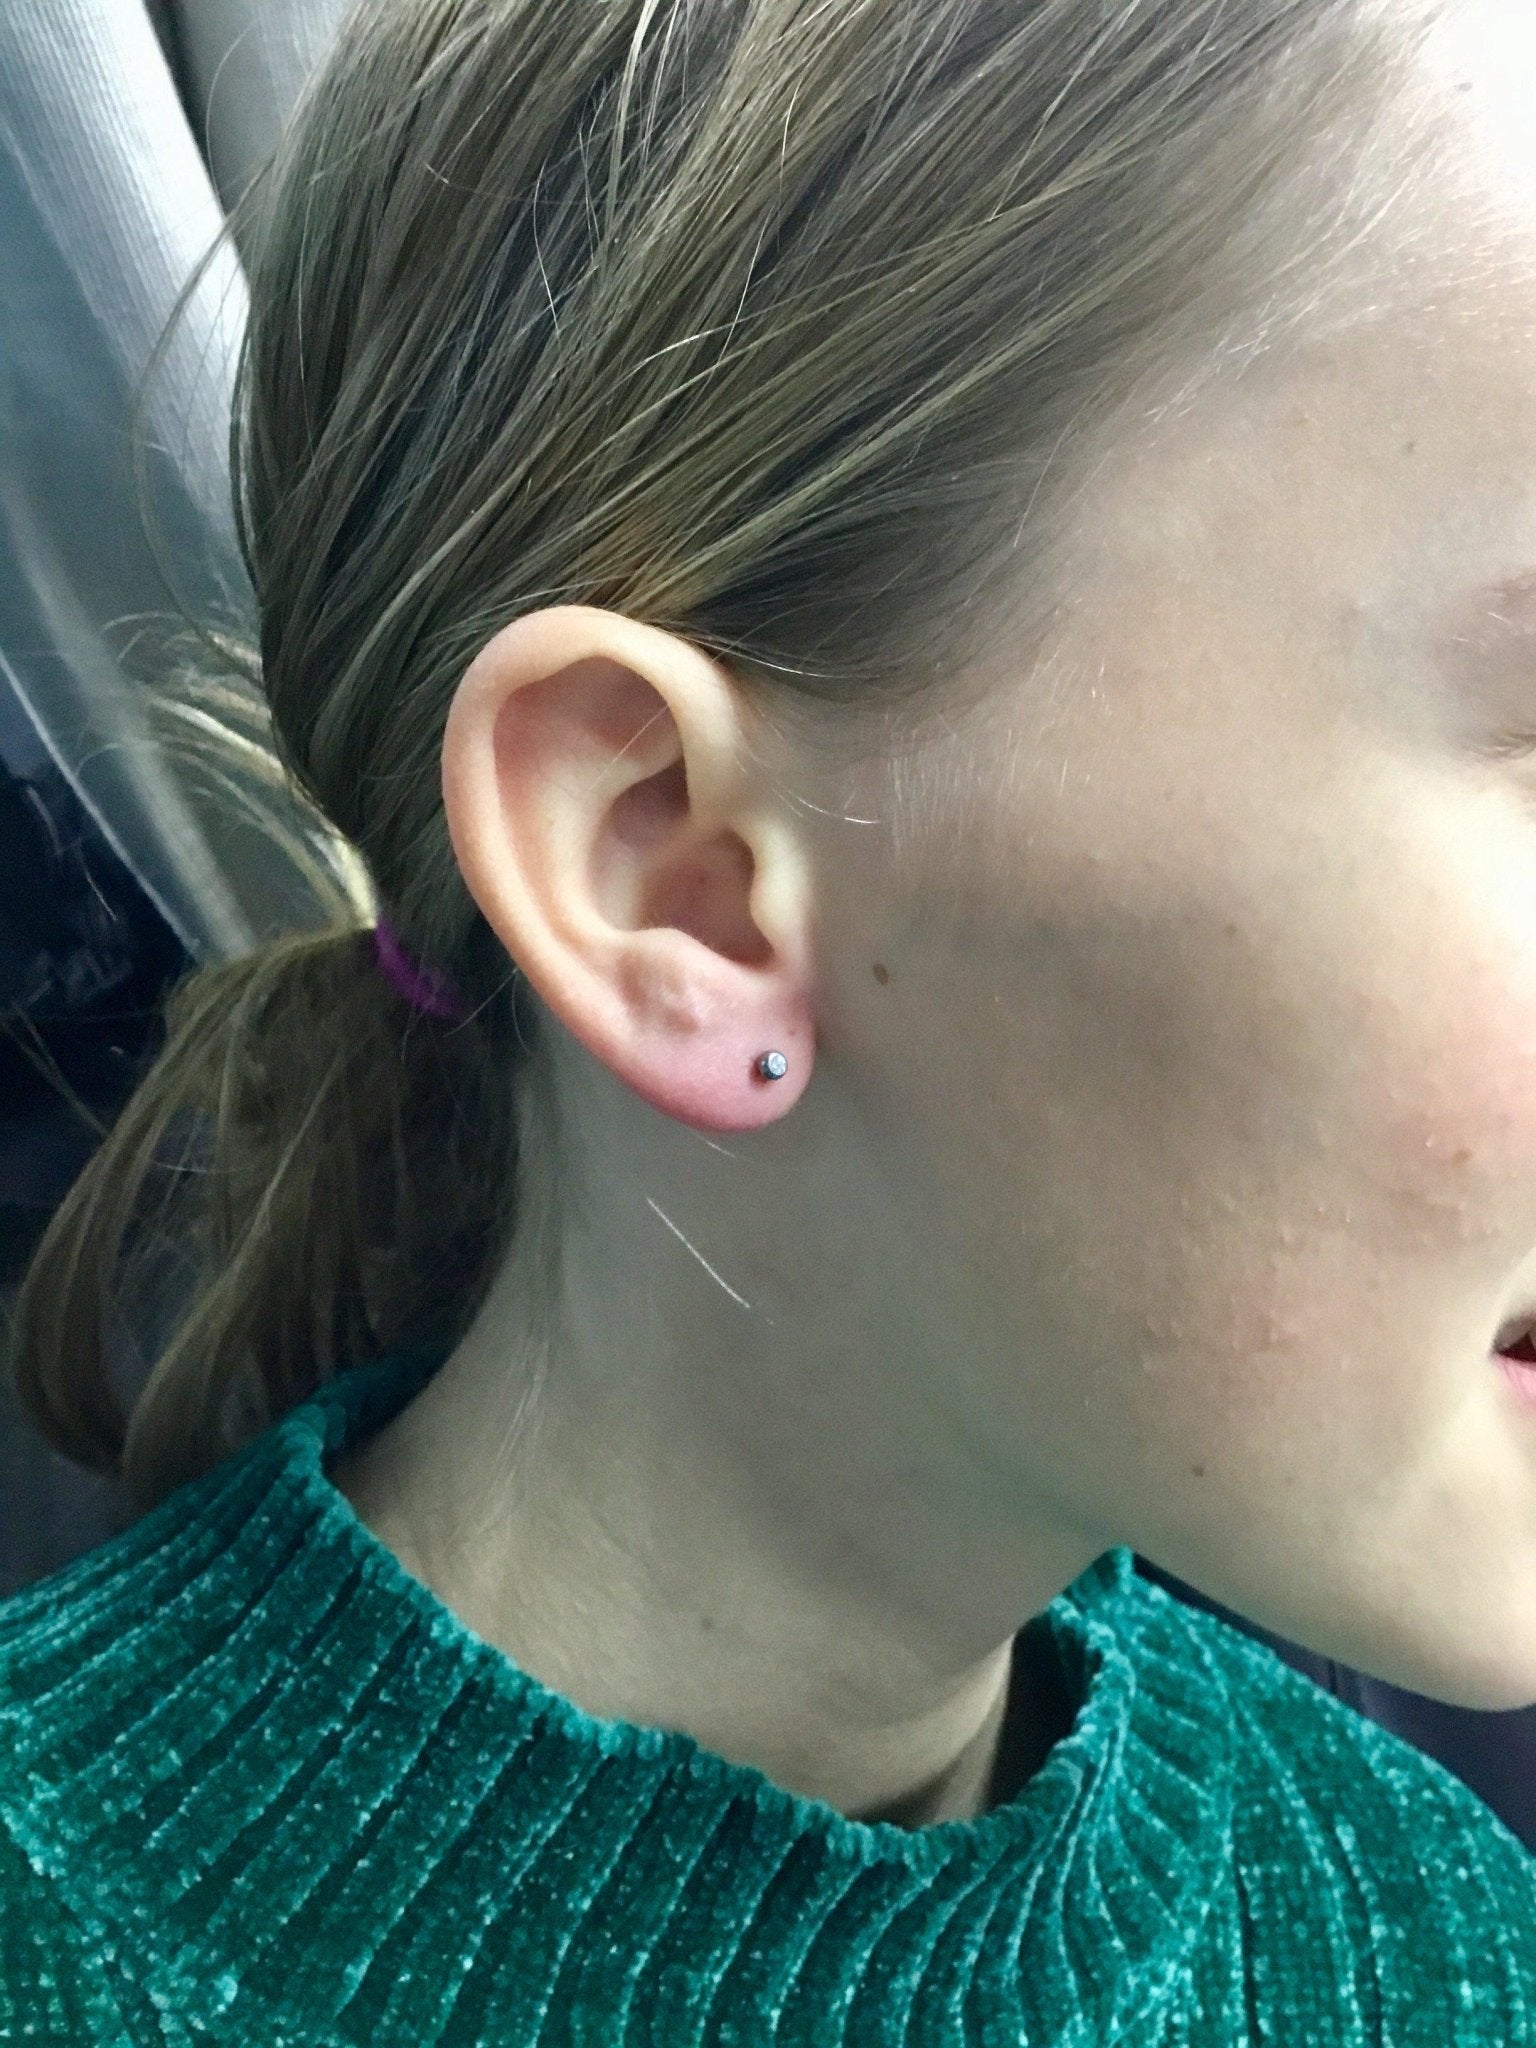 Celestial Crystal Push Pin Flat Back Earring | Maison Miru